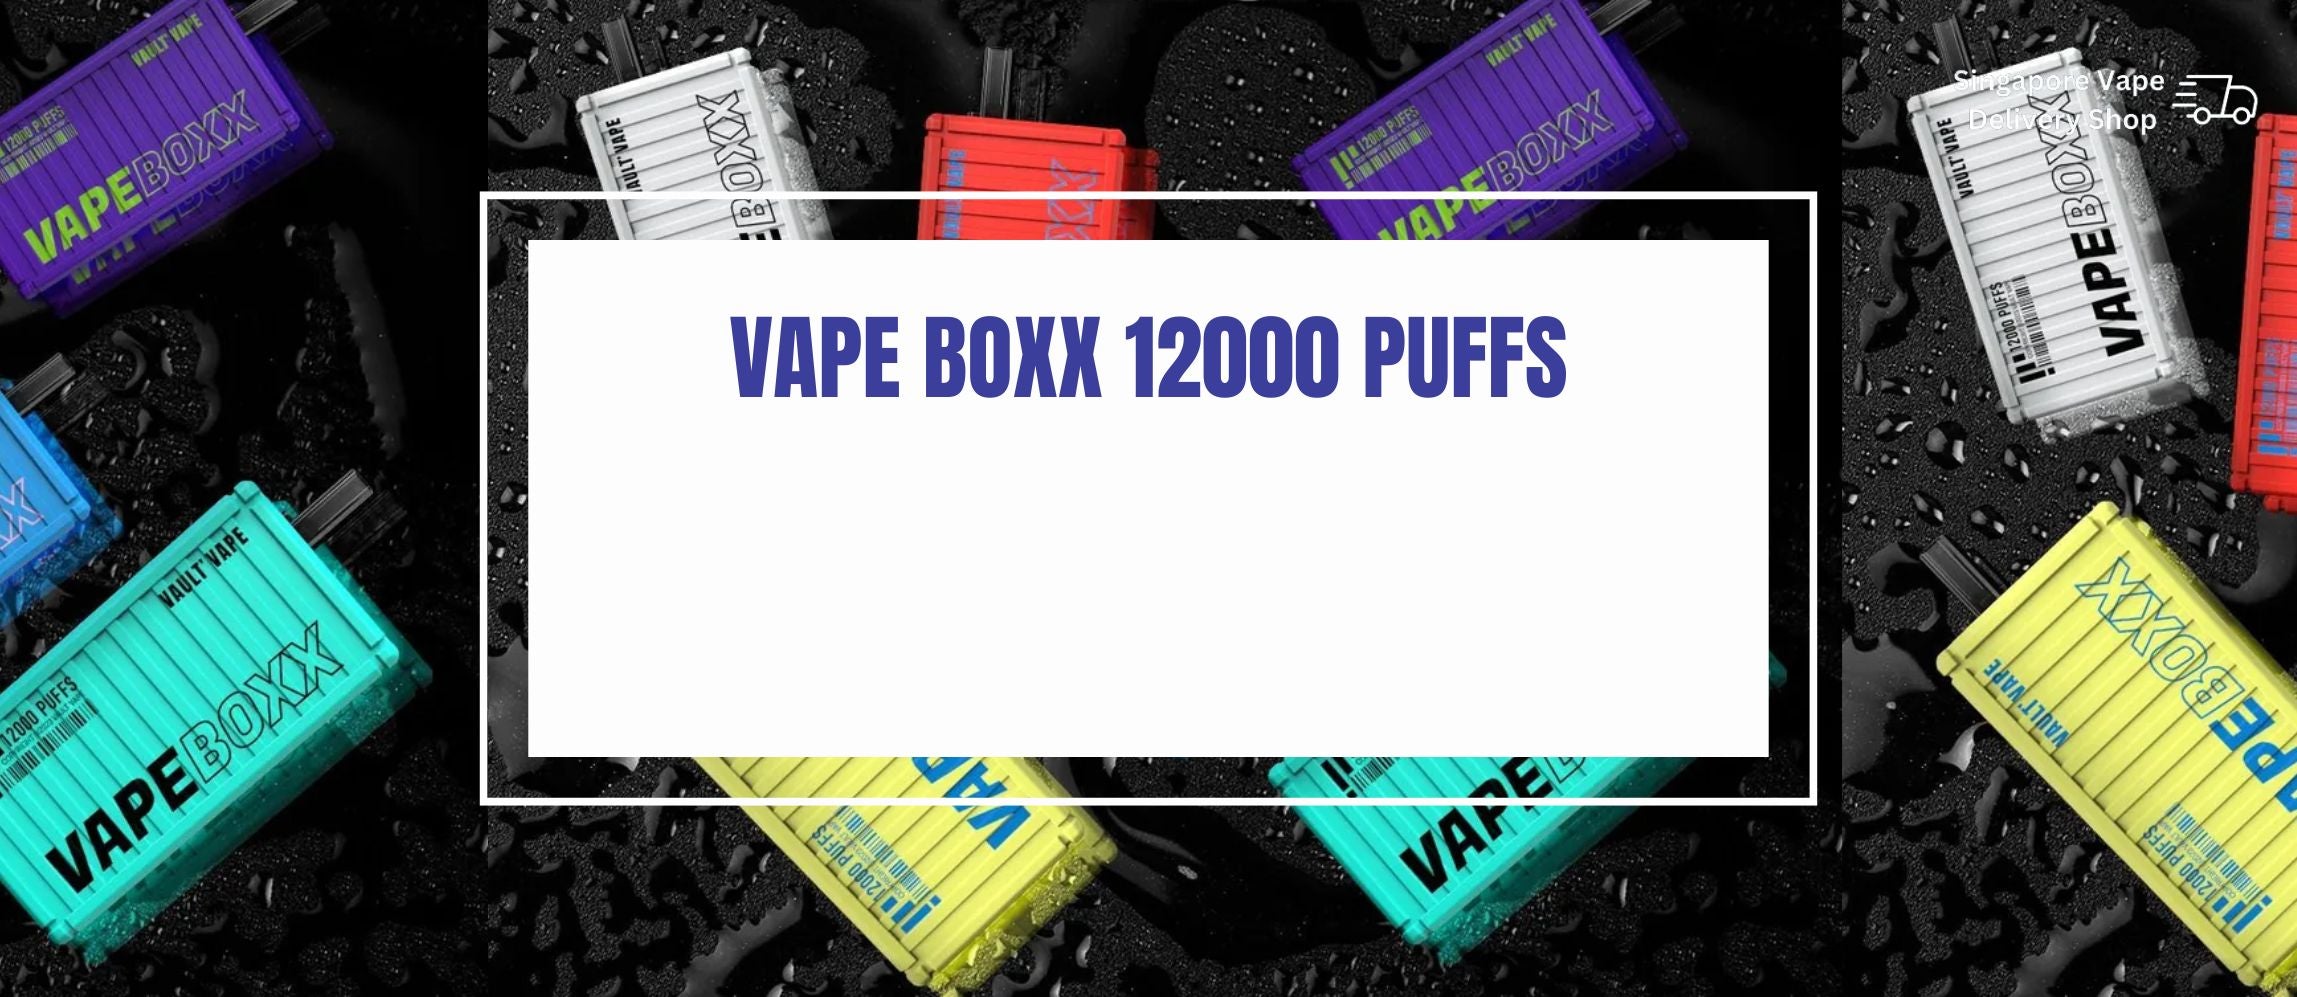 Vapebox-12000-banner